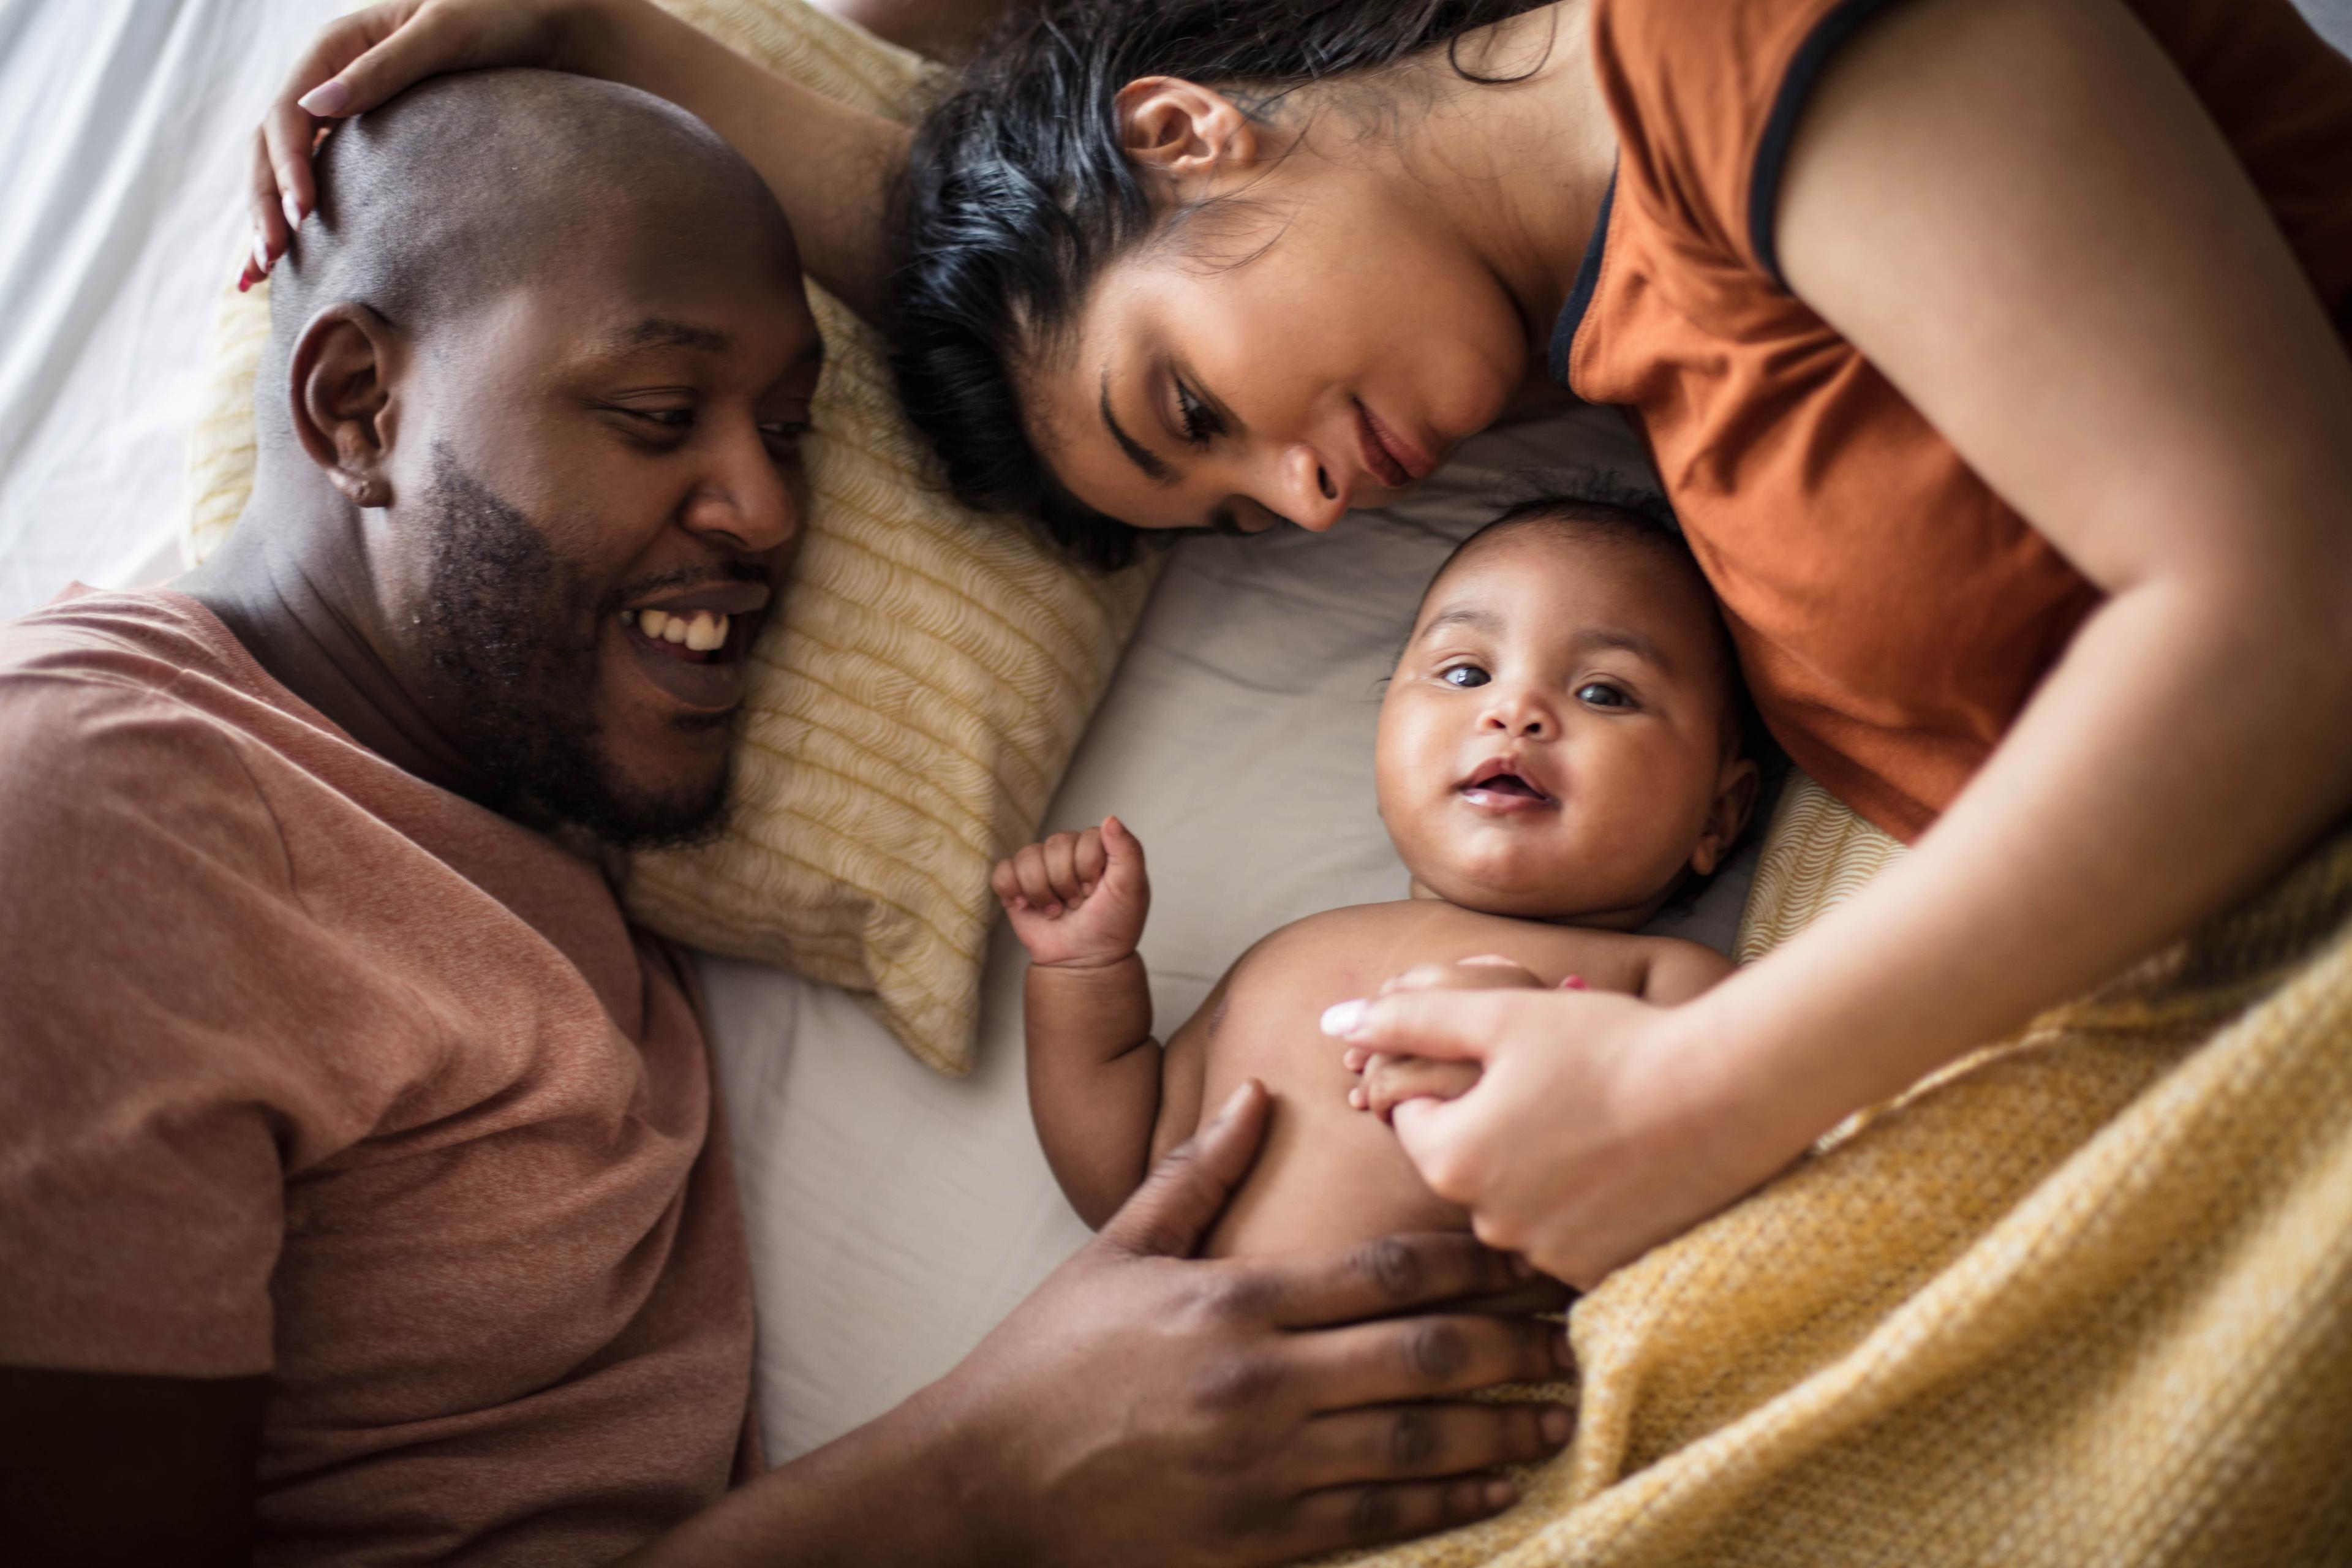 Black hetero parents and baby